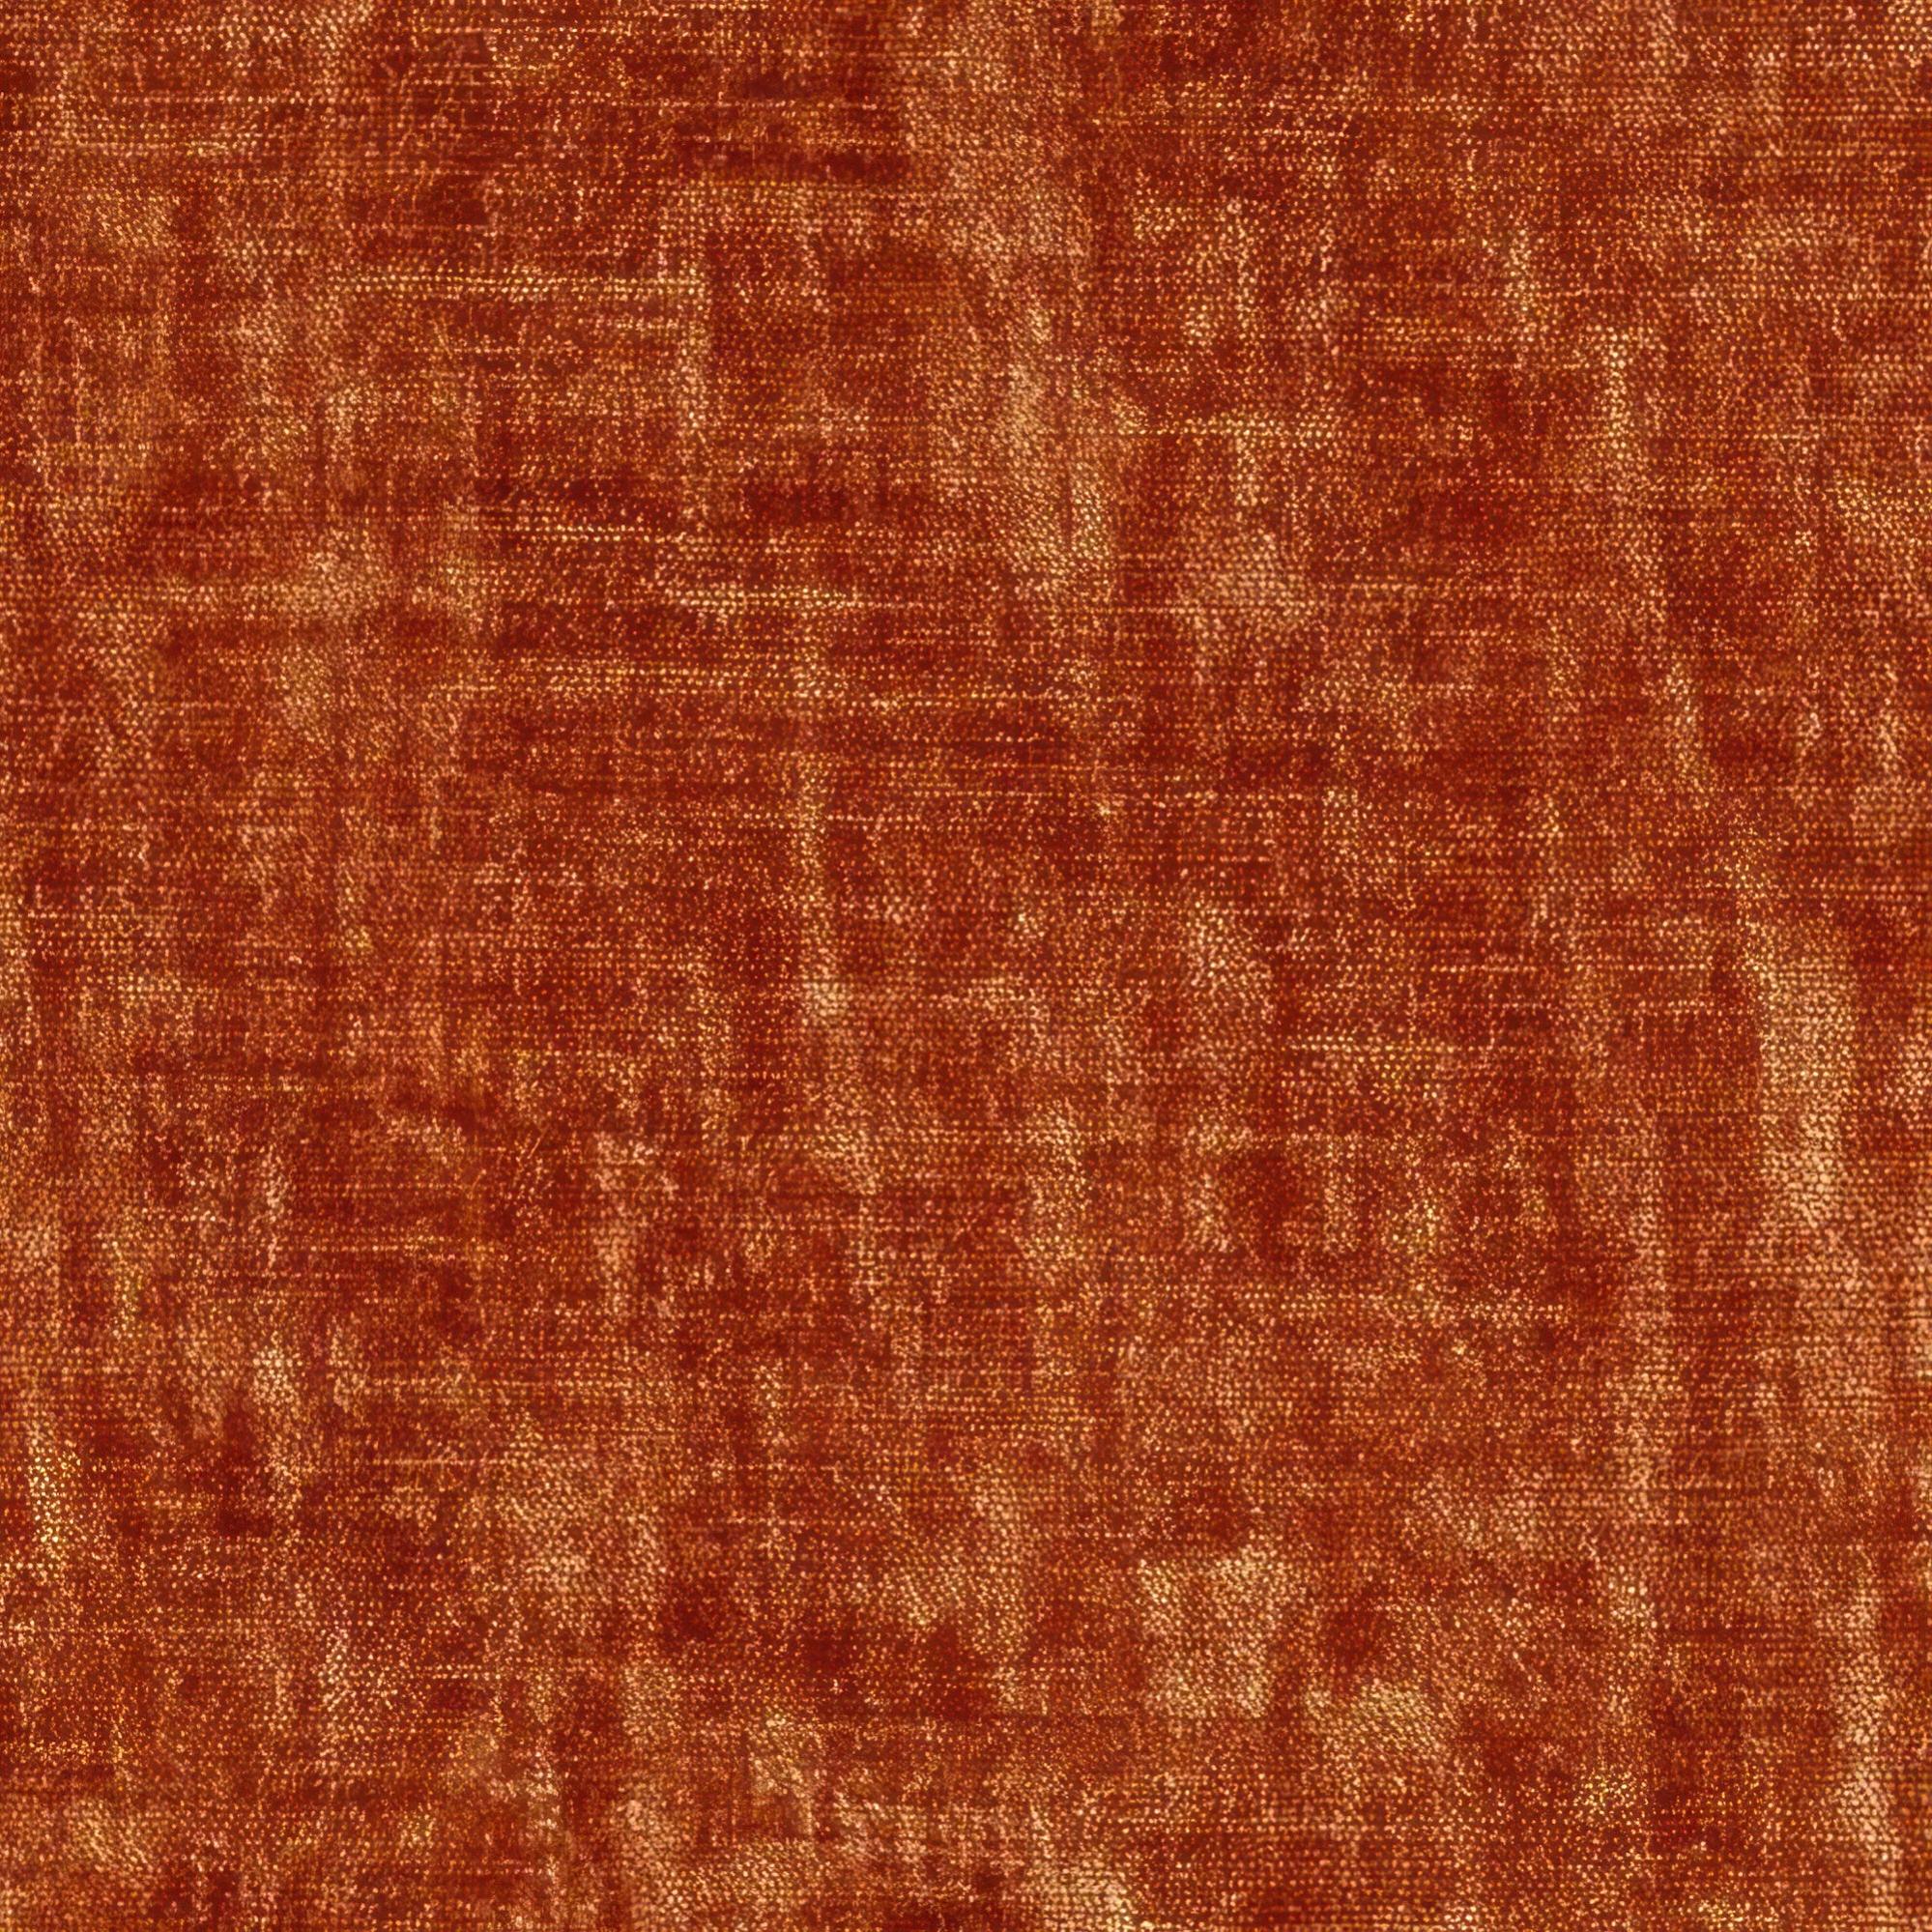 Tela al corte tapicería chenilla york teja ancho 280 cm